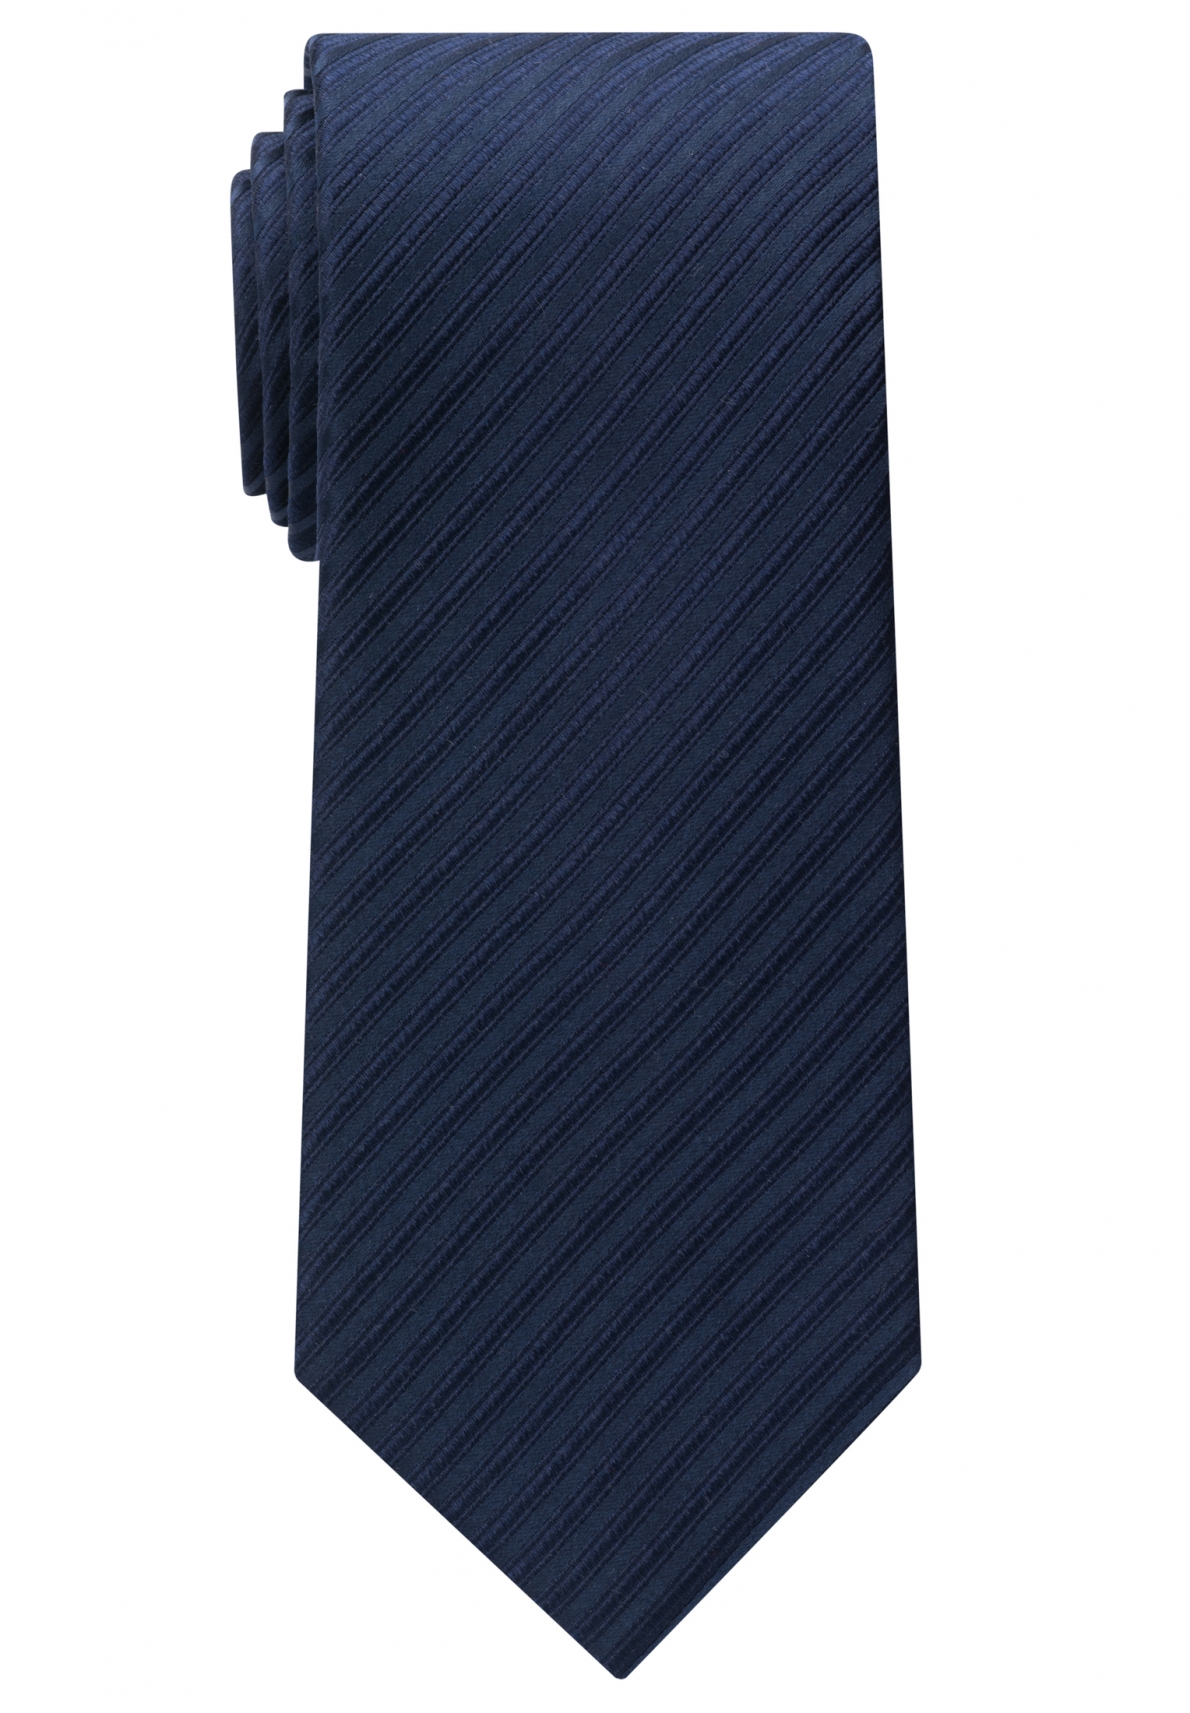 Eterna Krawatte dunkelblau gestreift | MODE 9716-19 SPEZIALIST